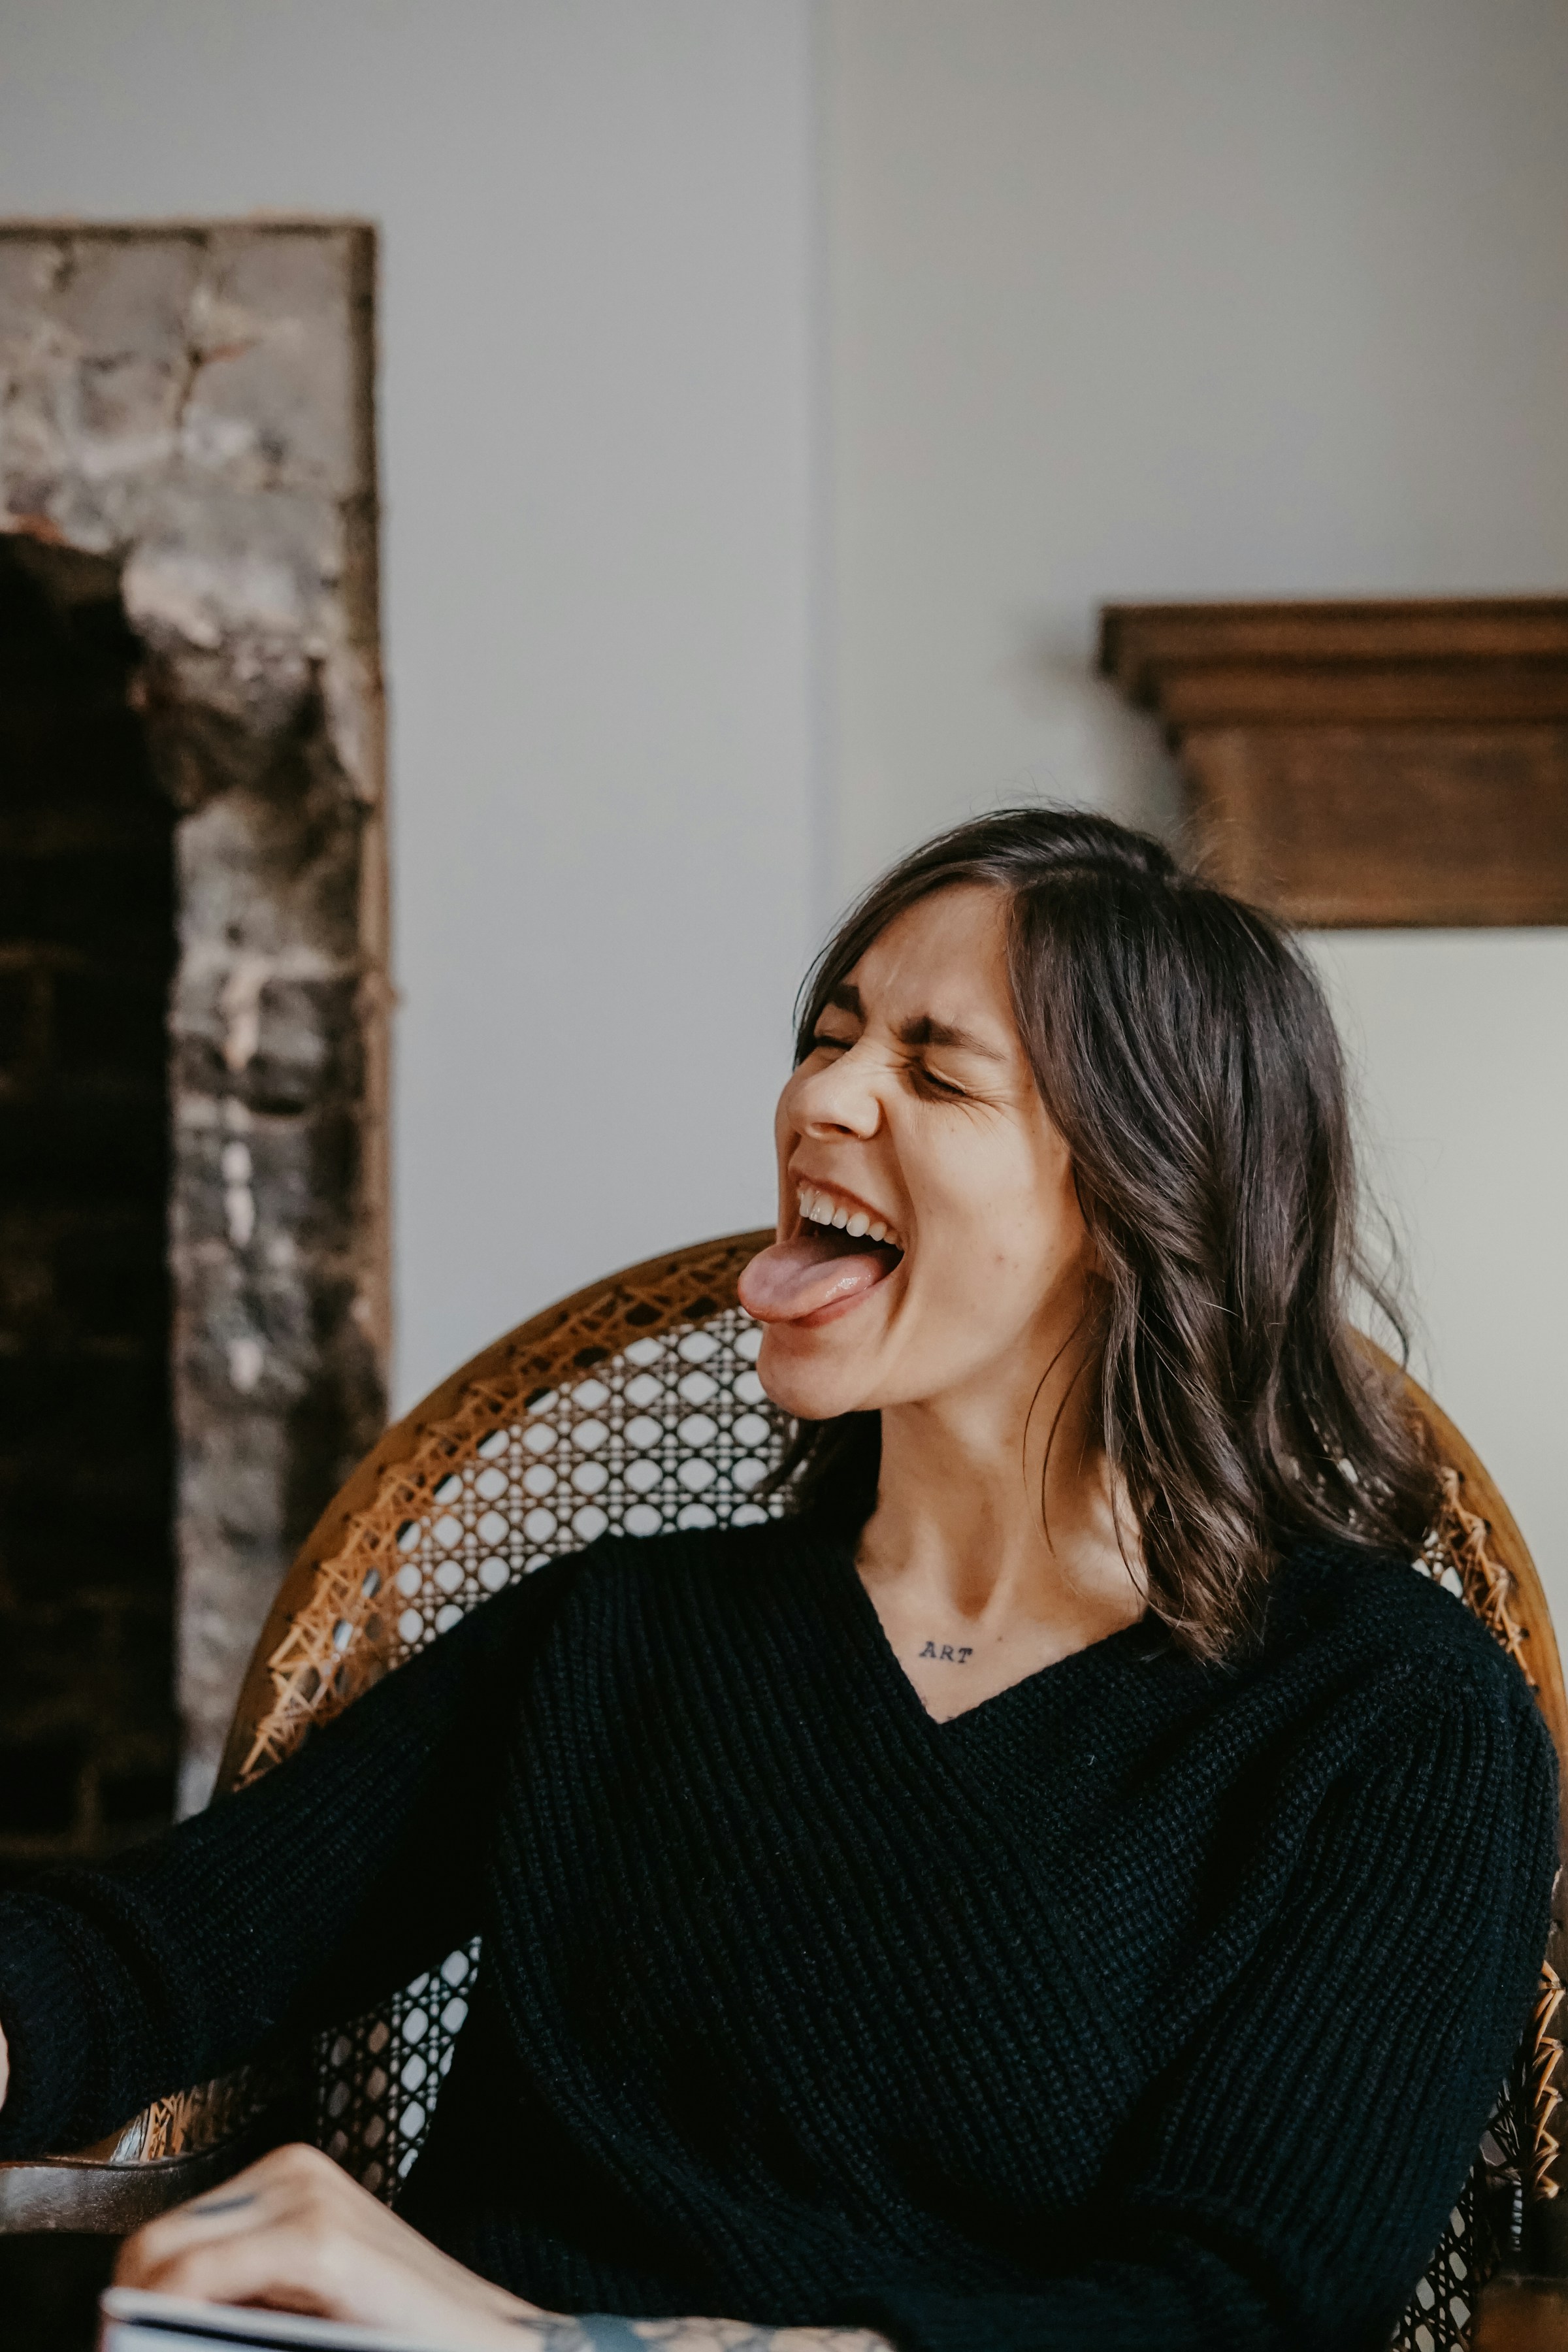 A woman laughing | Source: Unsplash